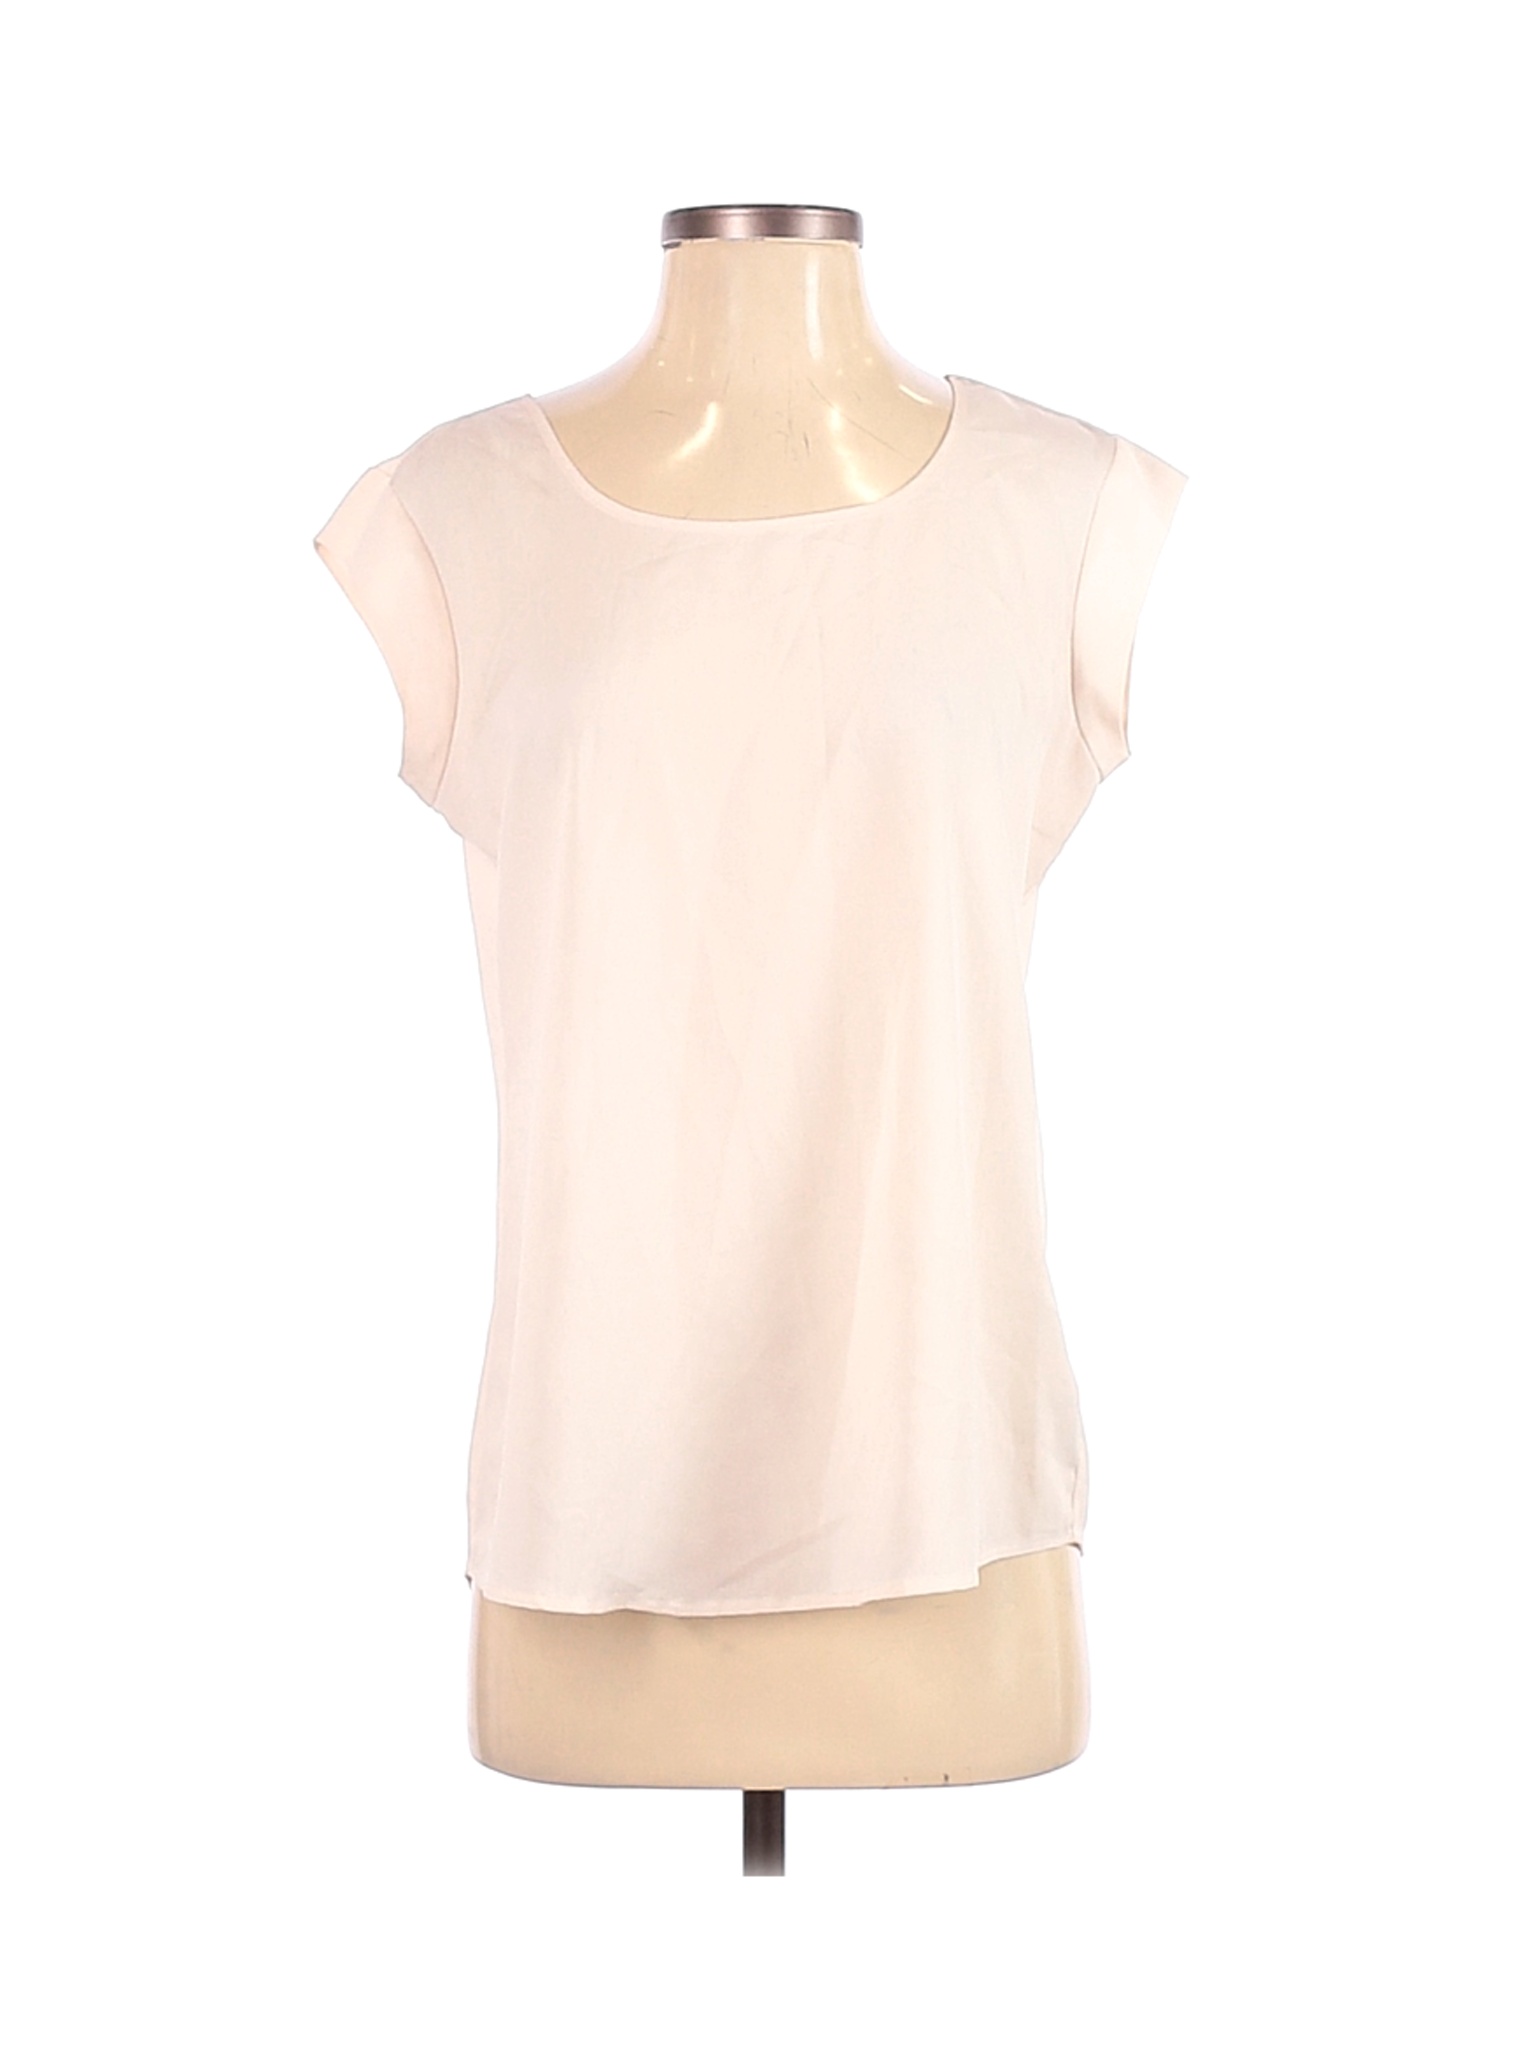 The Limited Women Ivory Short Sleeve Blouse S | eBay